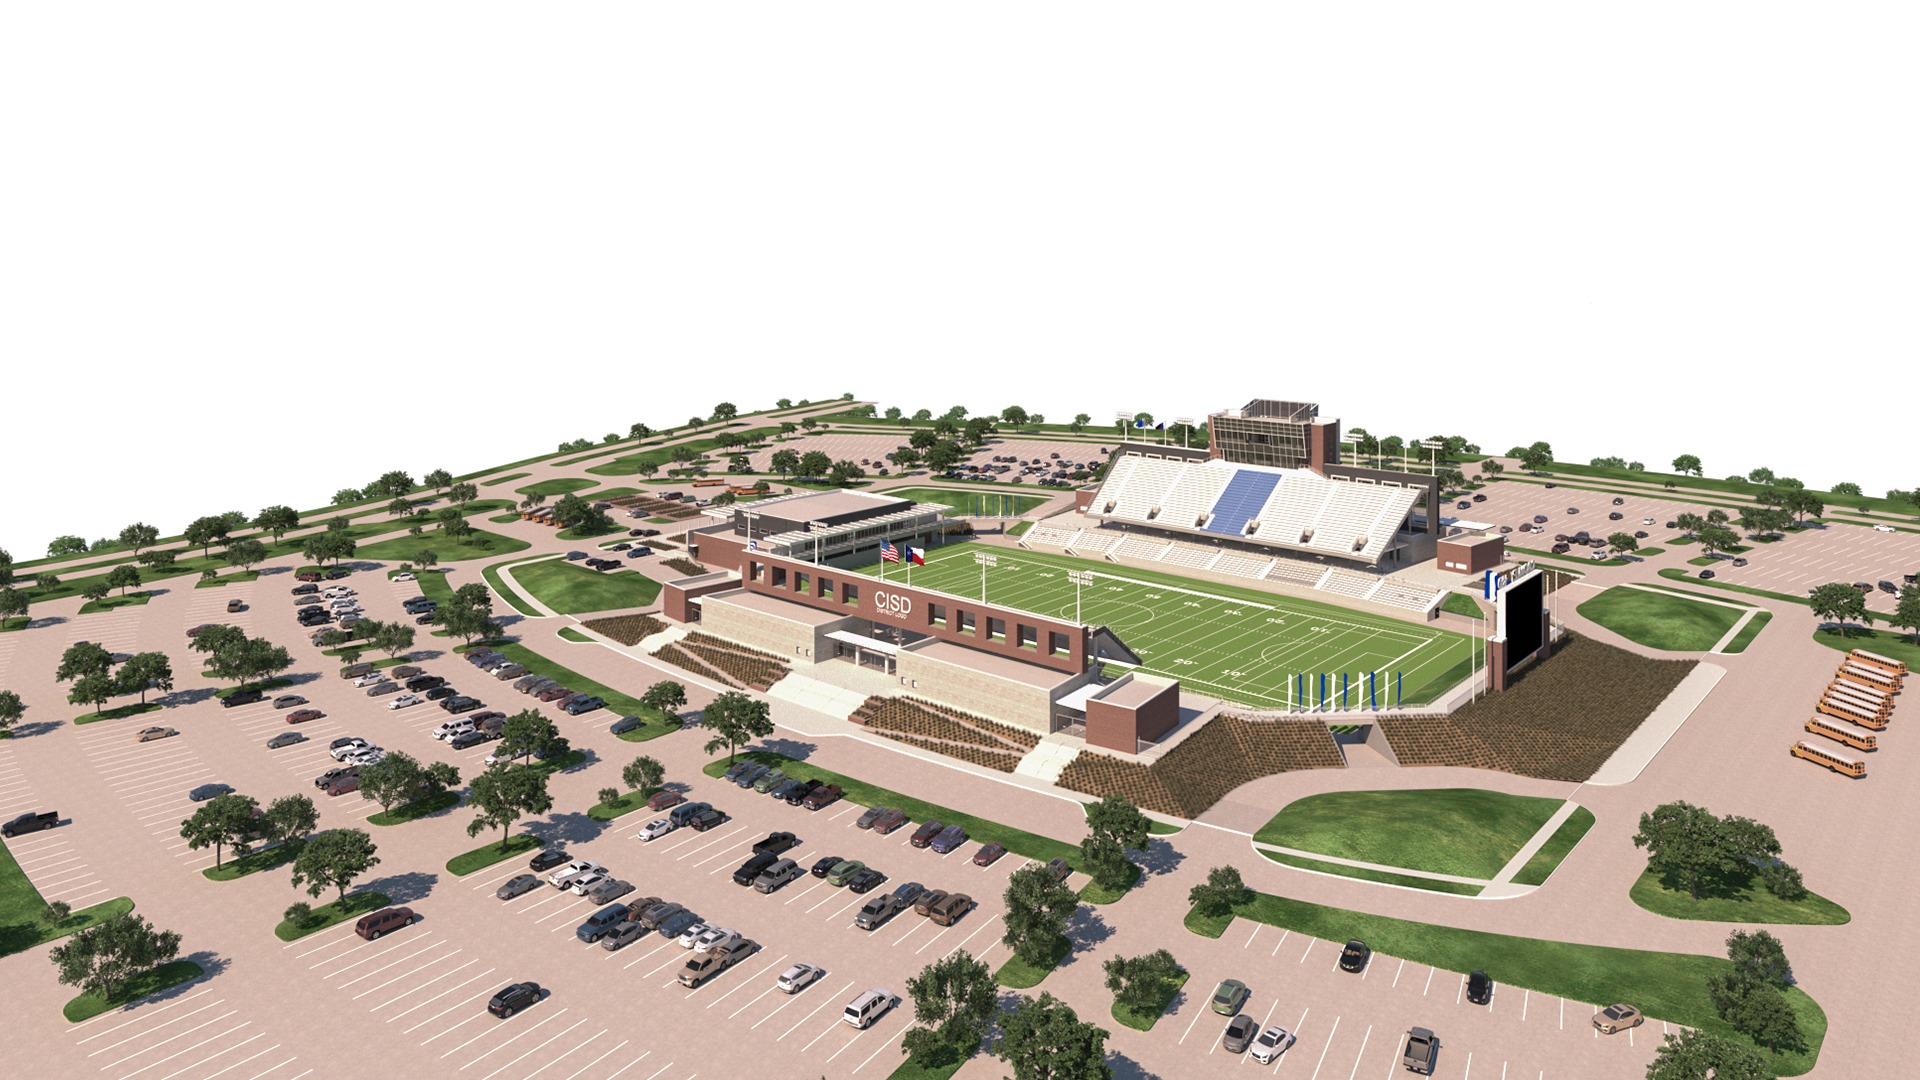 Slide 2 - CISD Sports Complex Opening 2022